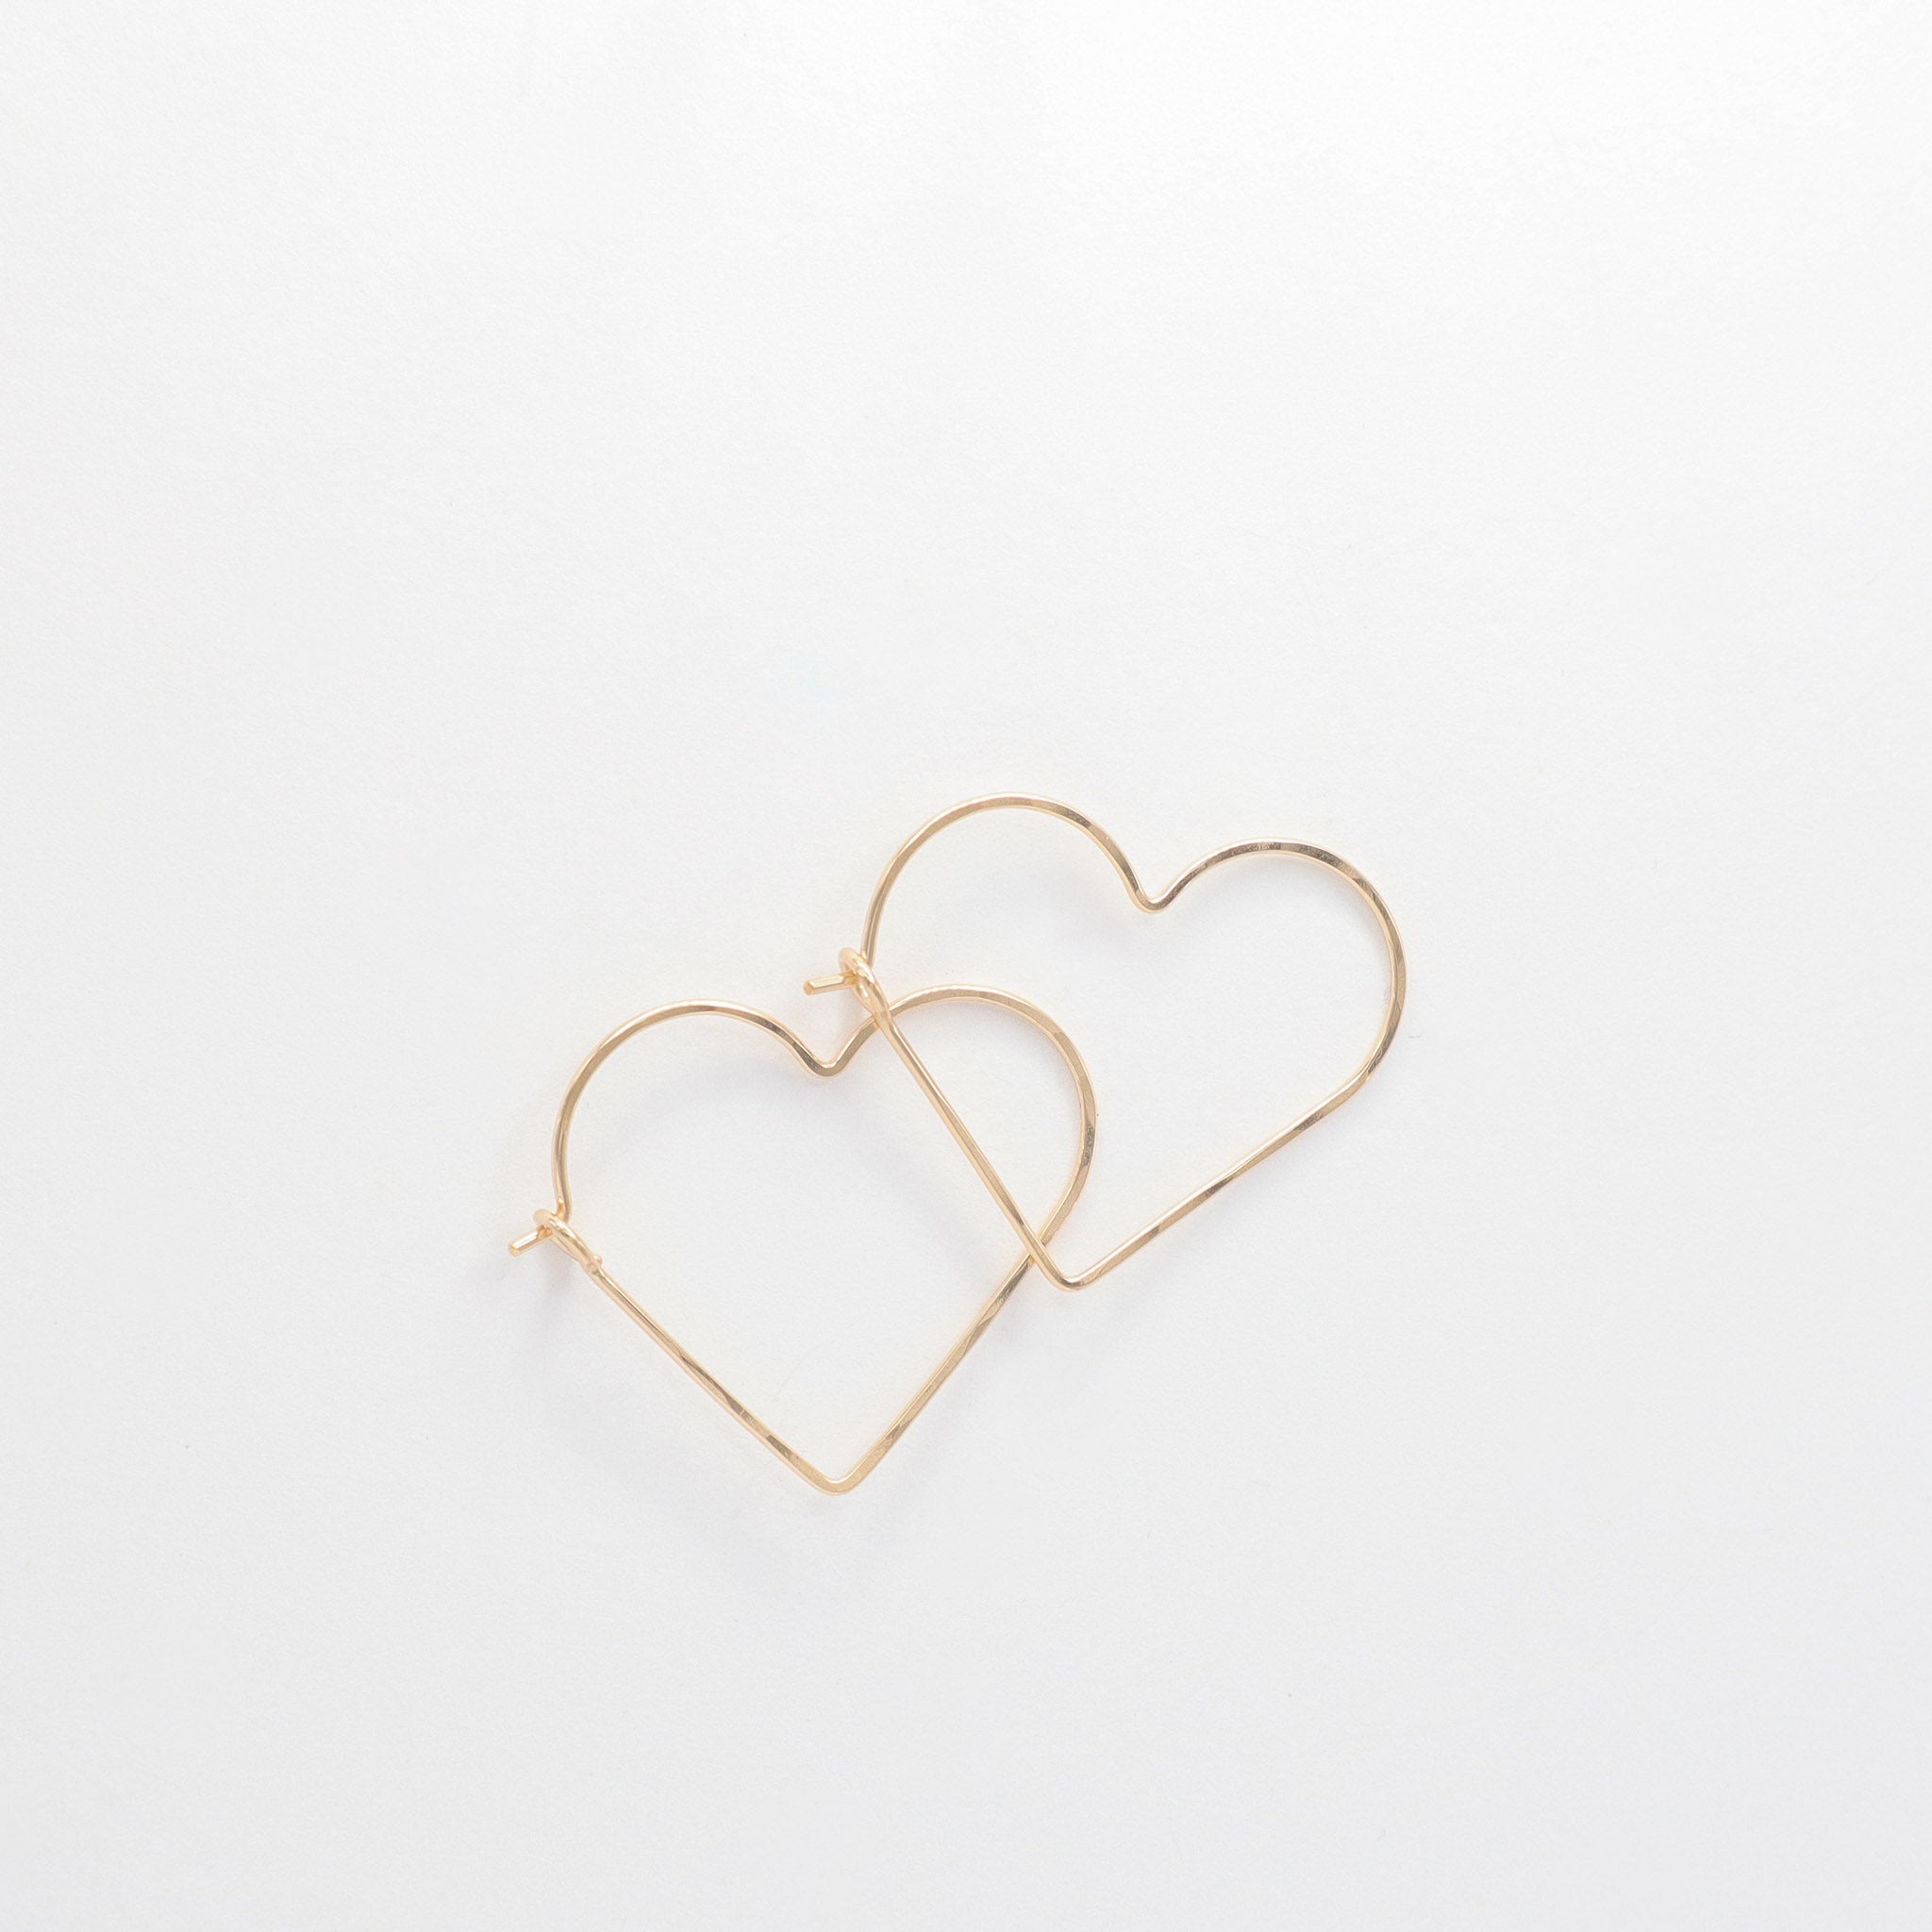 Petite Gold Heart Hoop Earrings, featured image